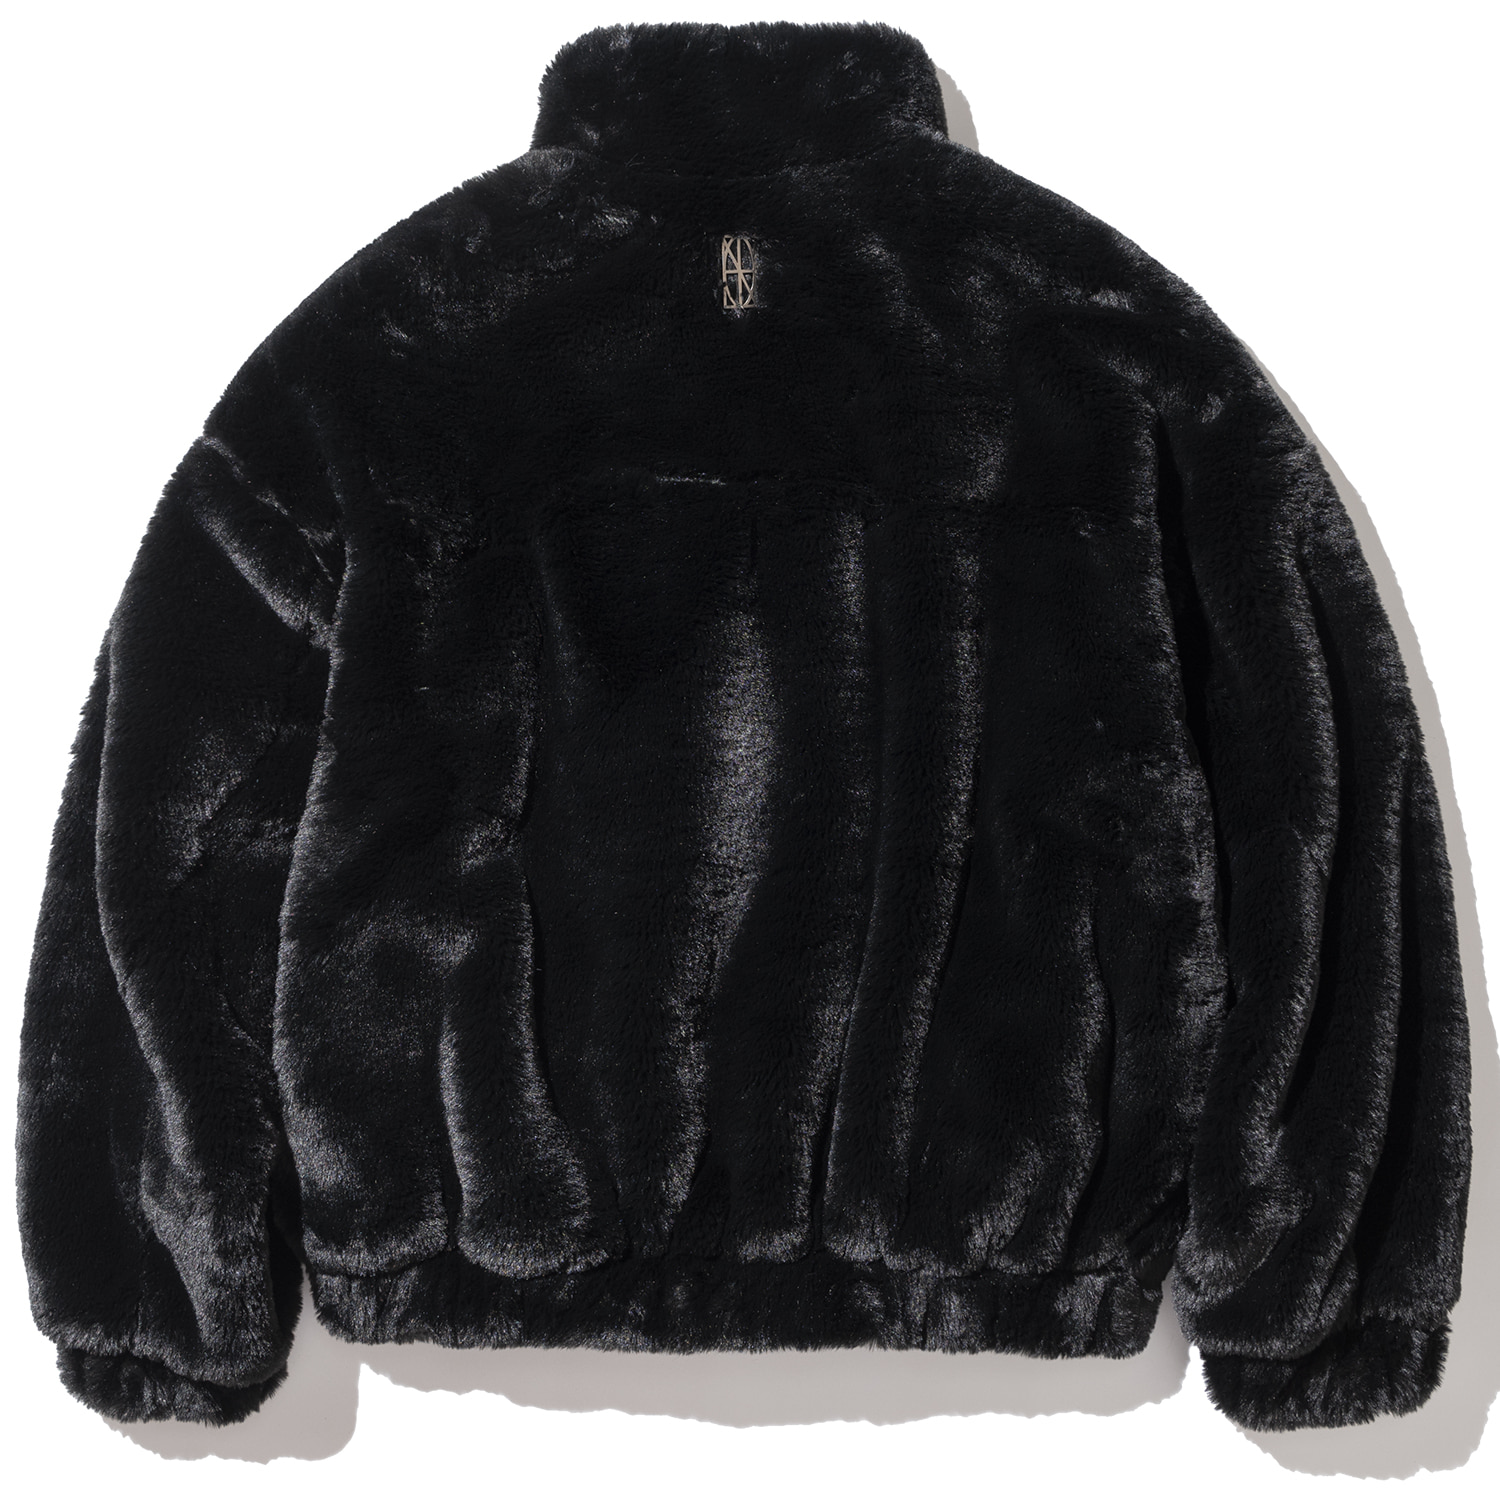 Symbol Fur Jacket Black,NOT4NERD